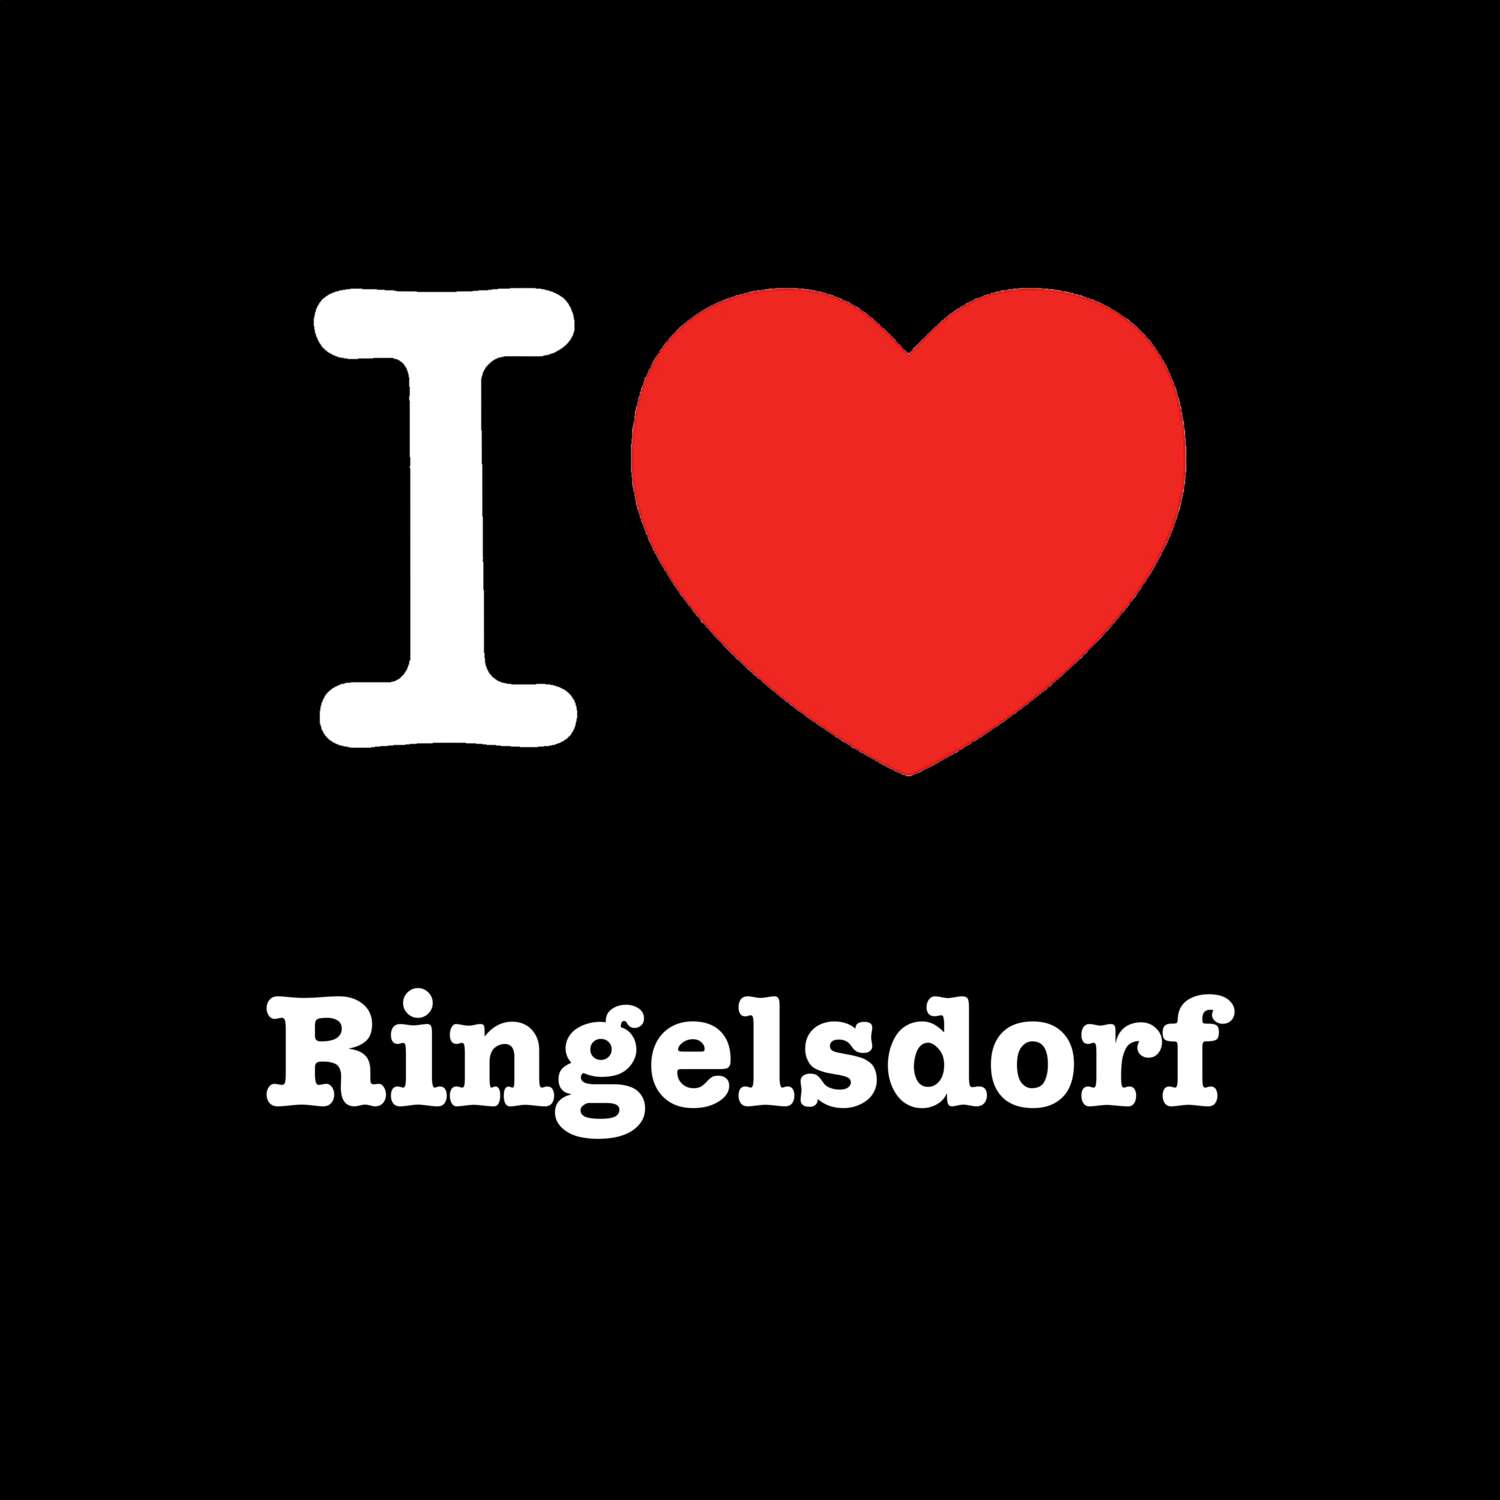 Ringelsdorf T-Shirt »I love«